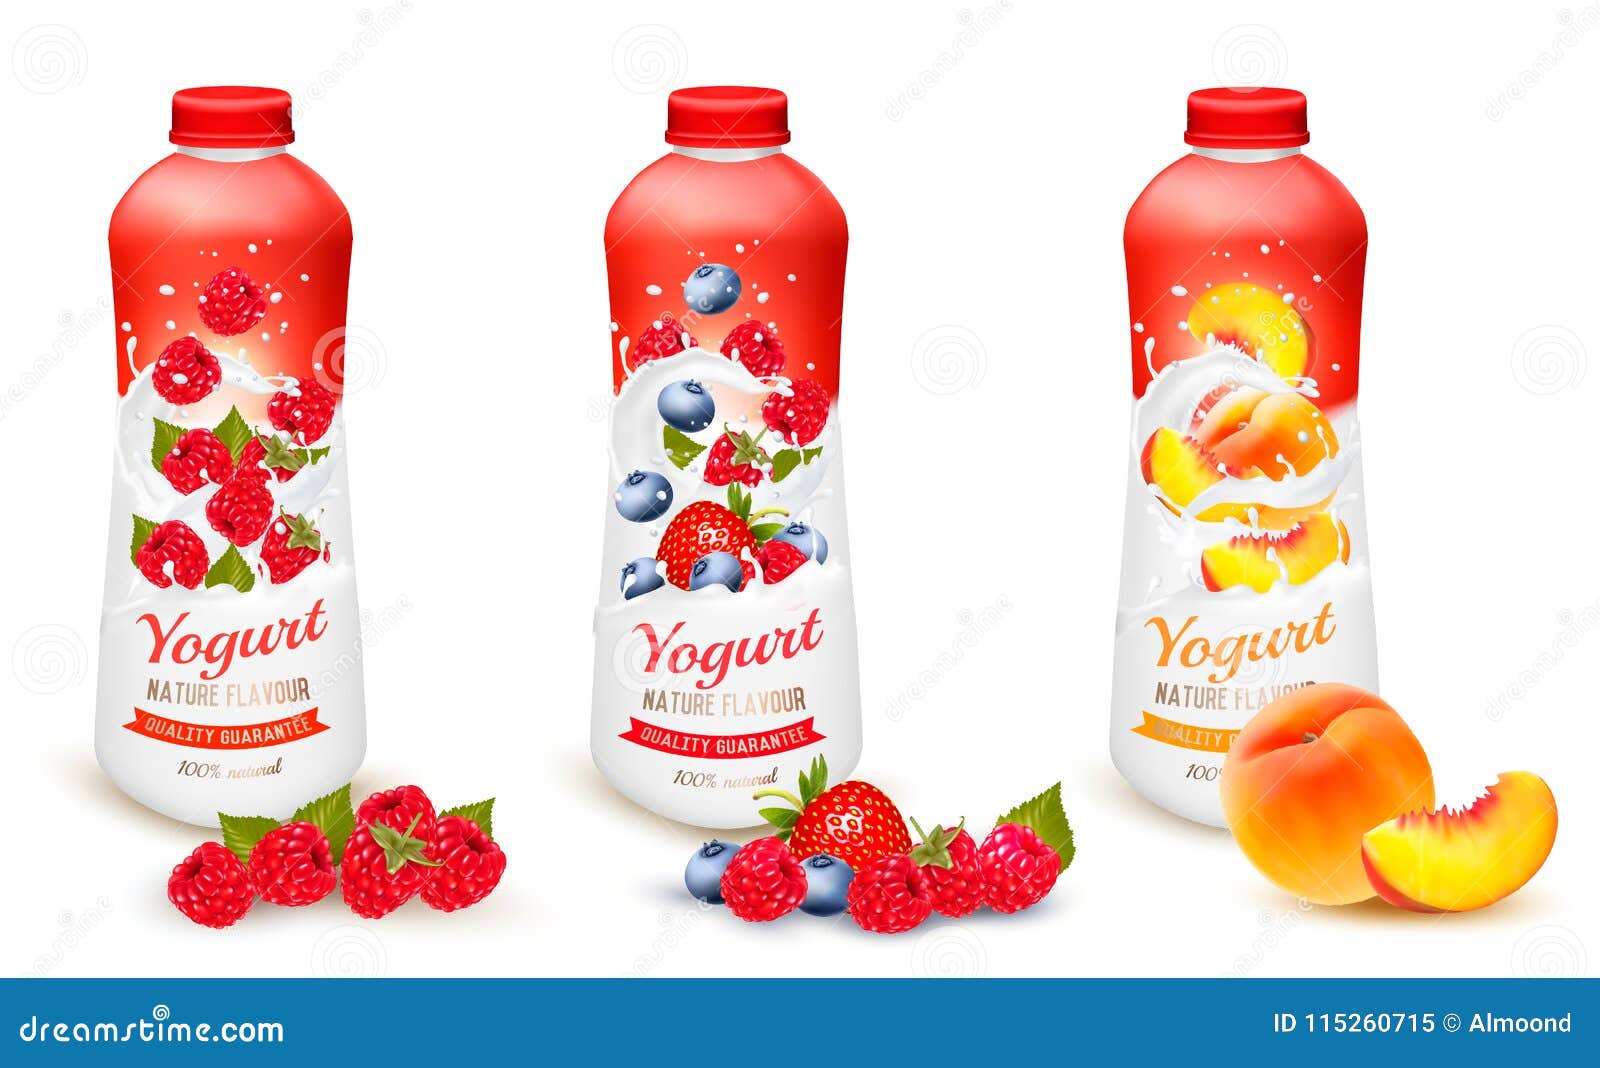 fruit yogurt with peach advert concept.